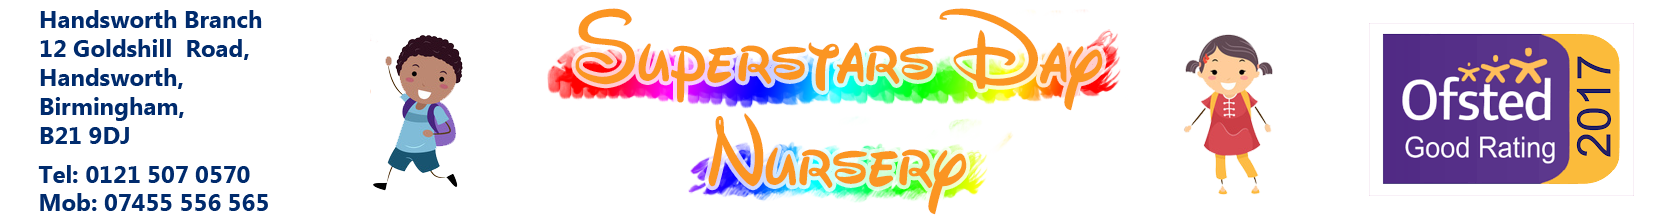 Superstars Day Nursery logo